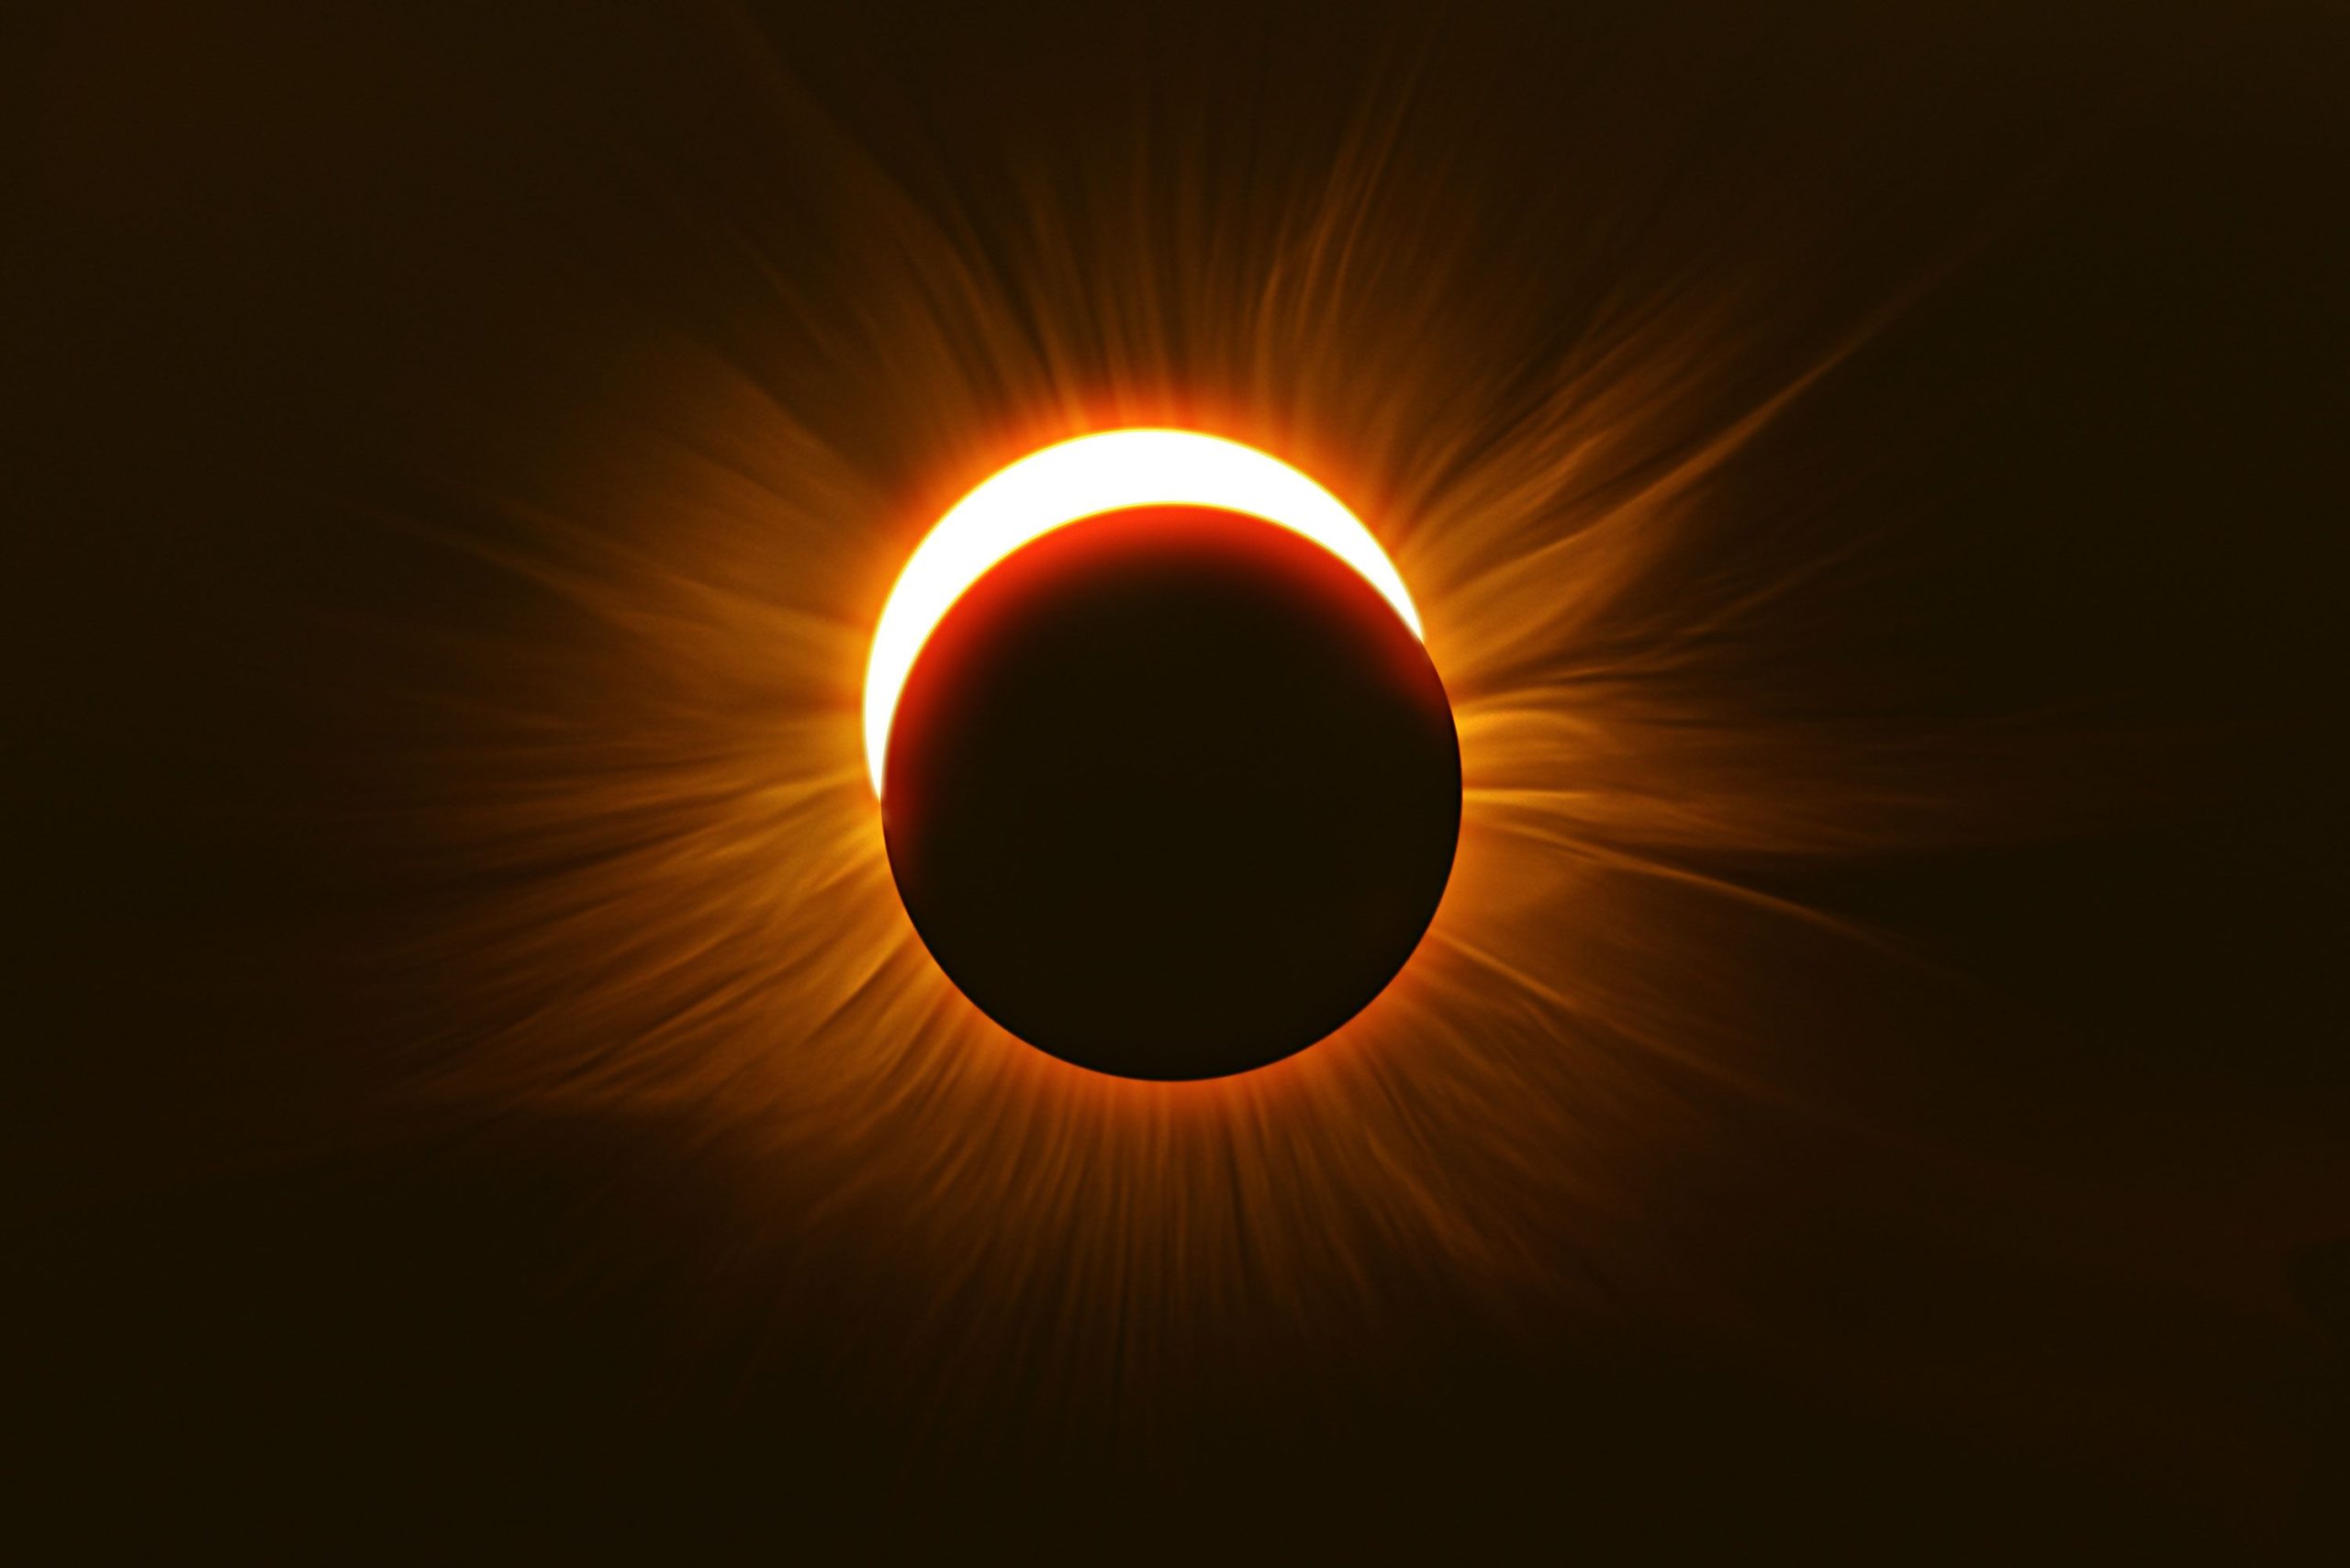 Solar eclipse in the UK on Thursday 10 June 2021 Islamic Portal